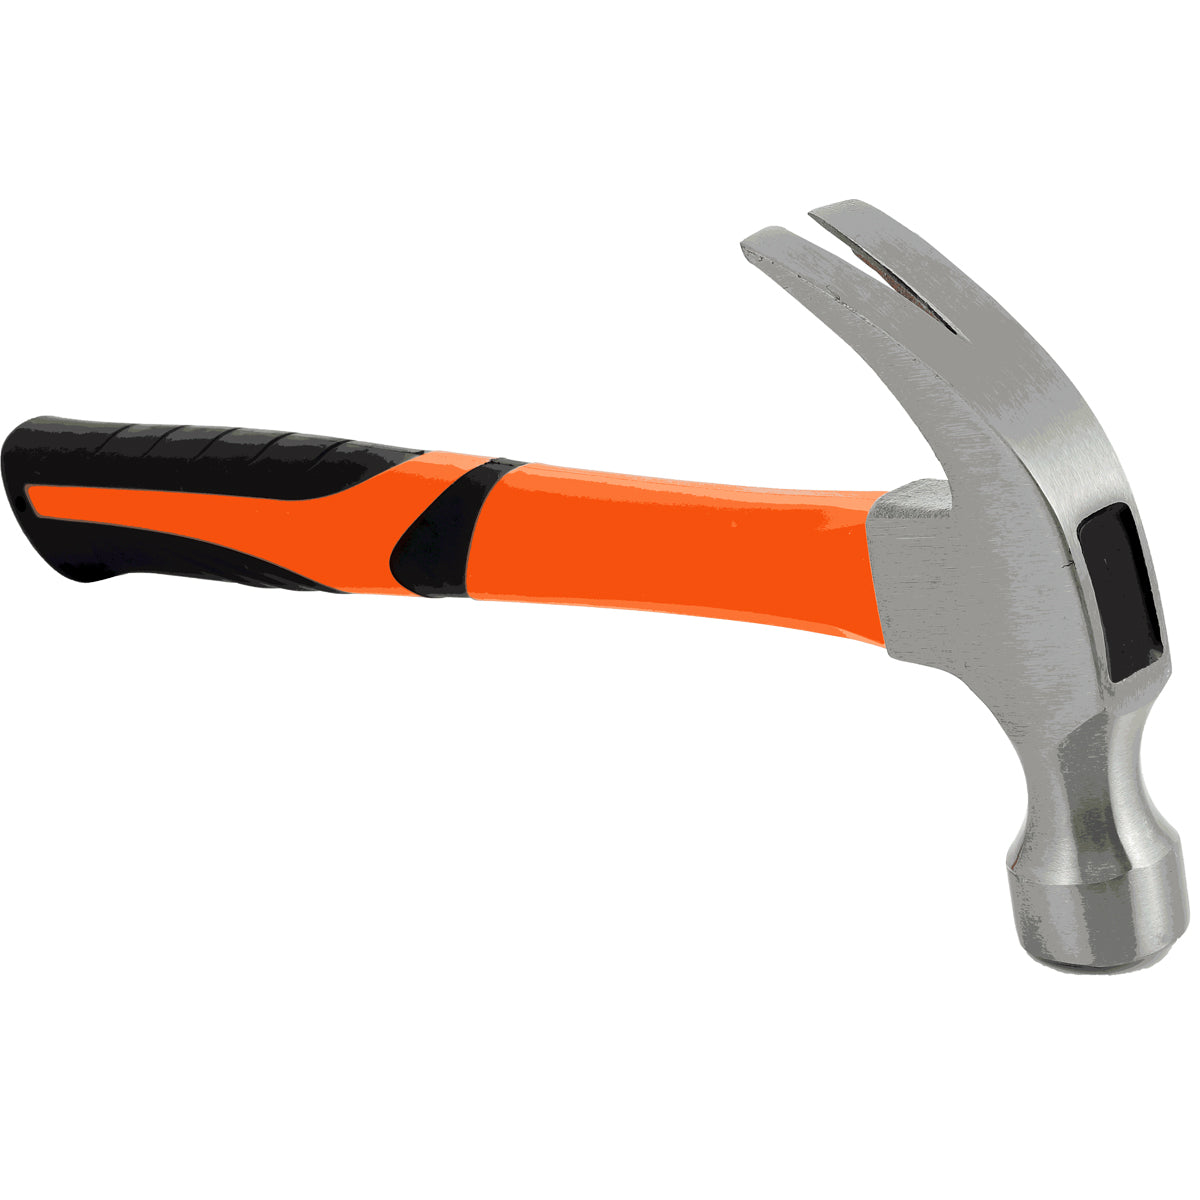 Kendo 20oz Fiberglass Claw Hammer